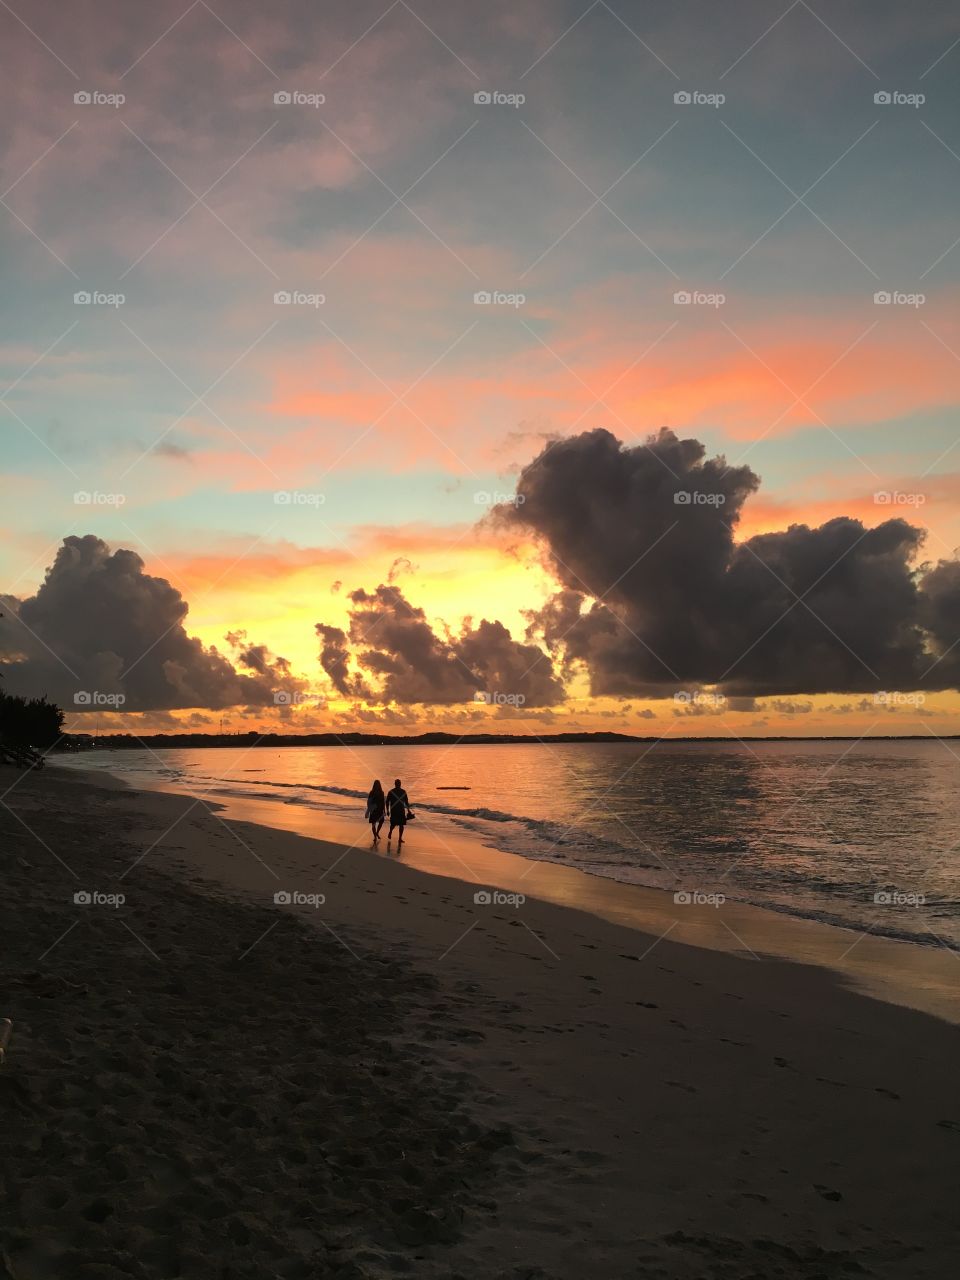 Romantic sunset stroll along the beach. 